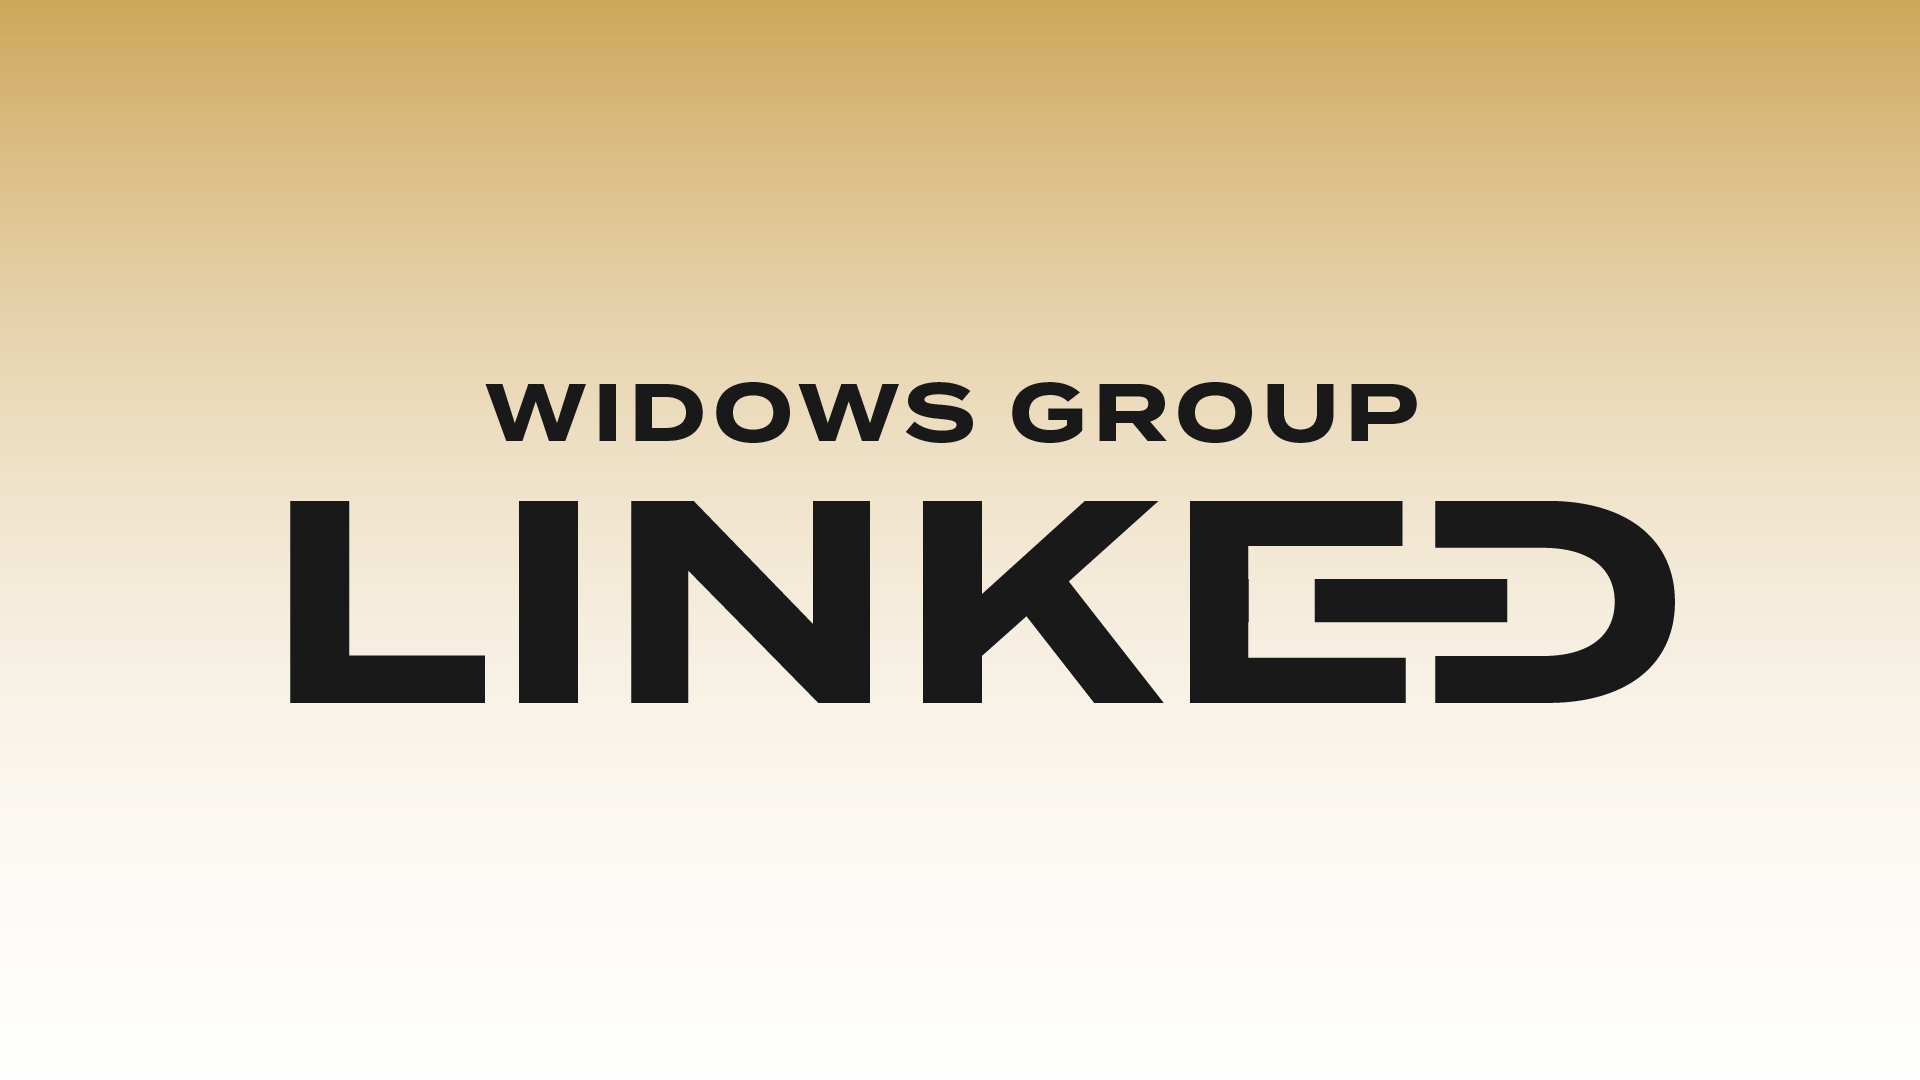 Linked Widows Group